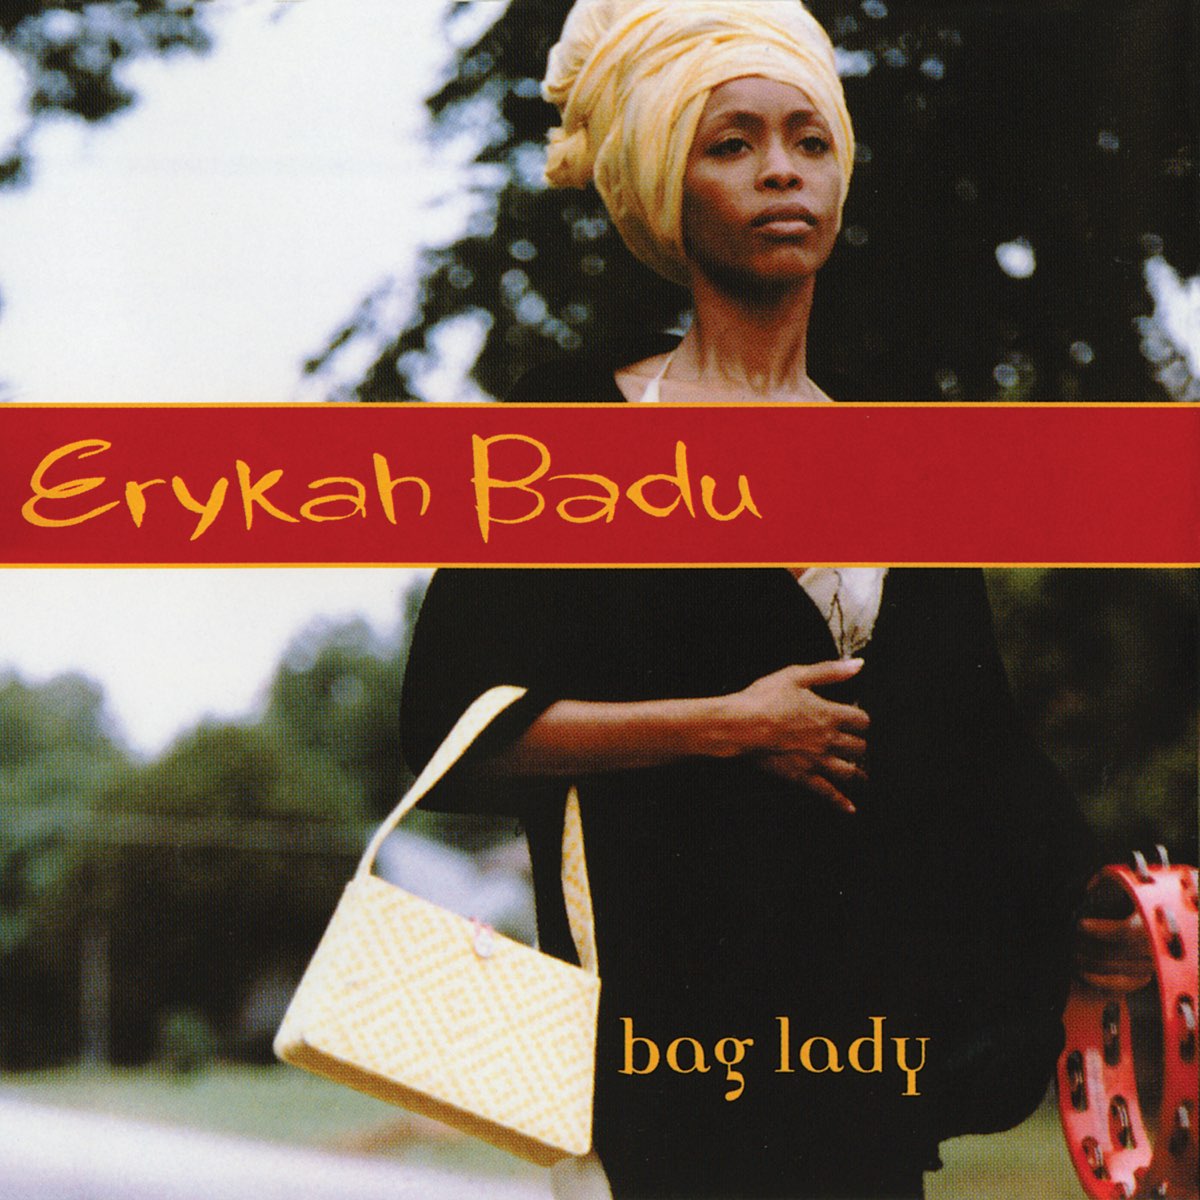 Bag Lady - EP by Erykah Badu on Apple Music